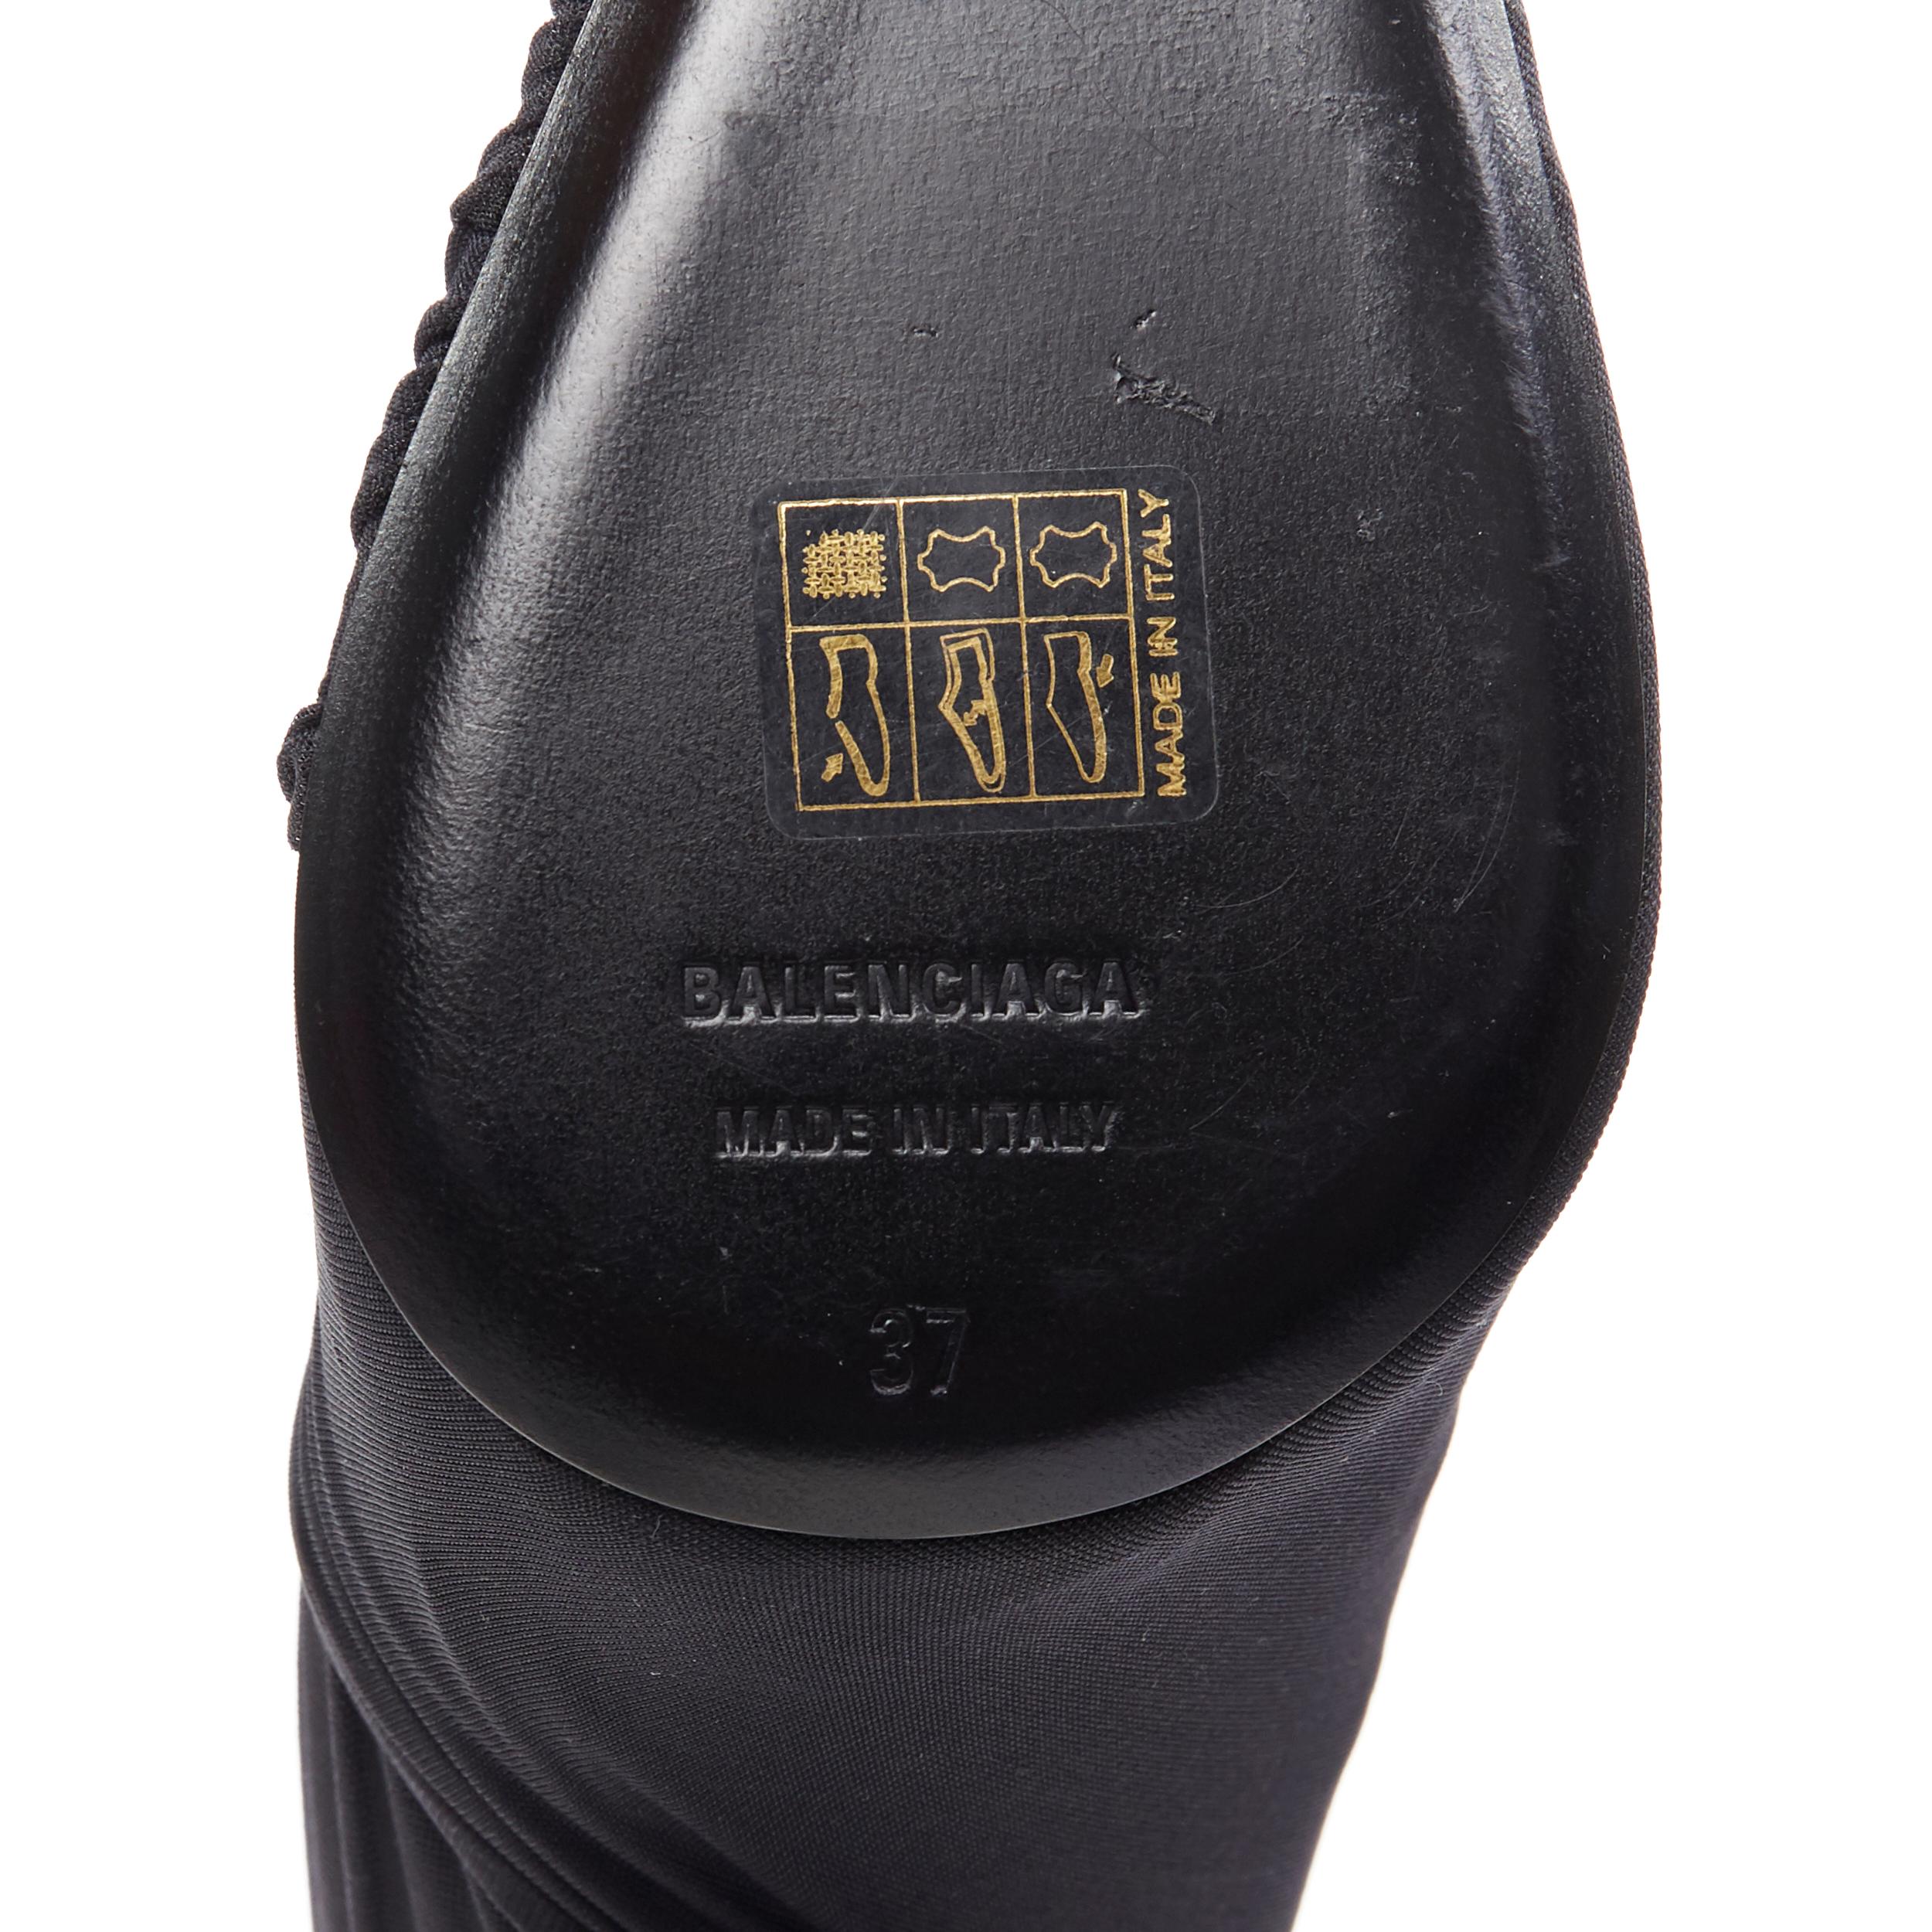 new BALENCIAGA Knife Drape Knit black stretch jersey wrapped high heel pump EU37 3